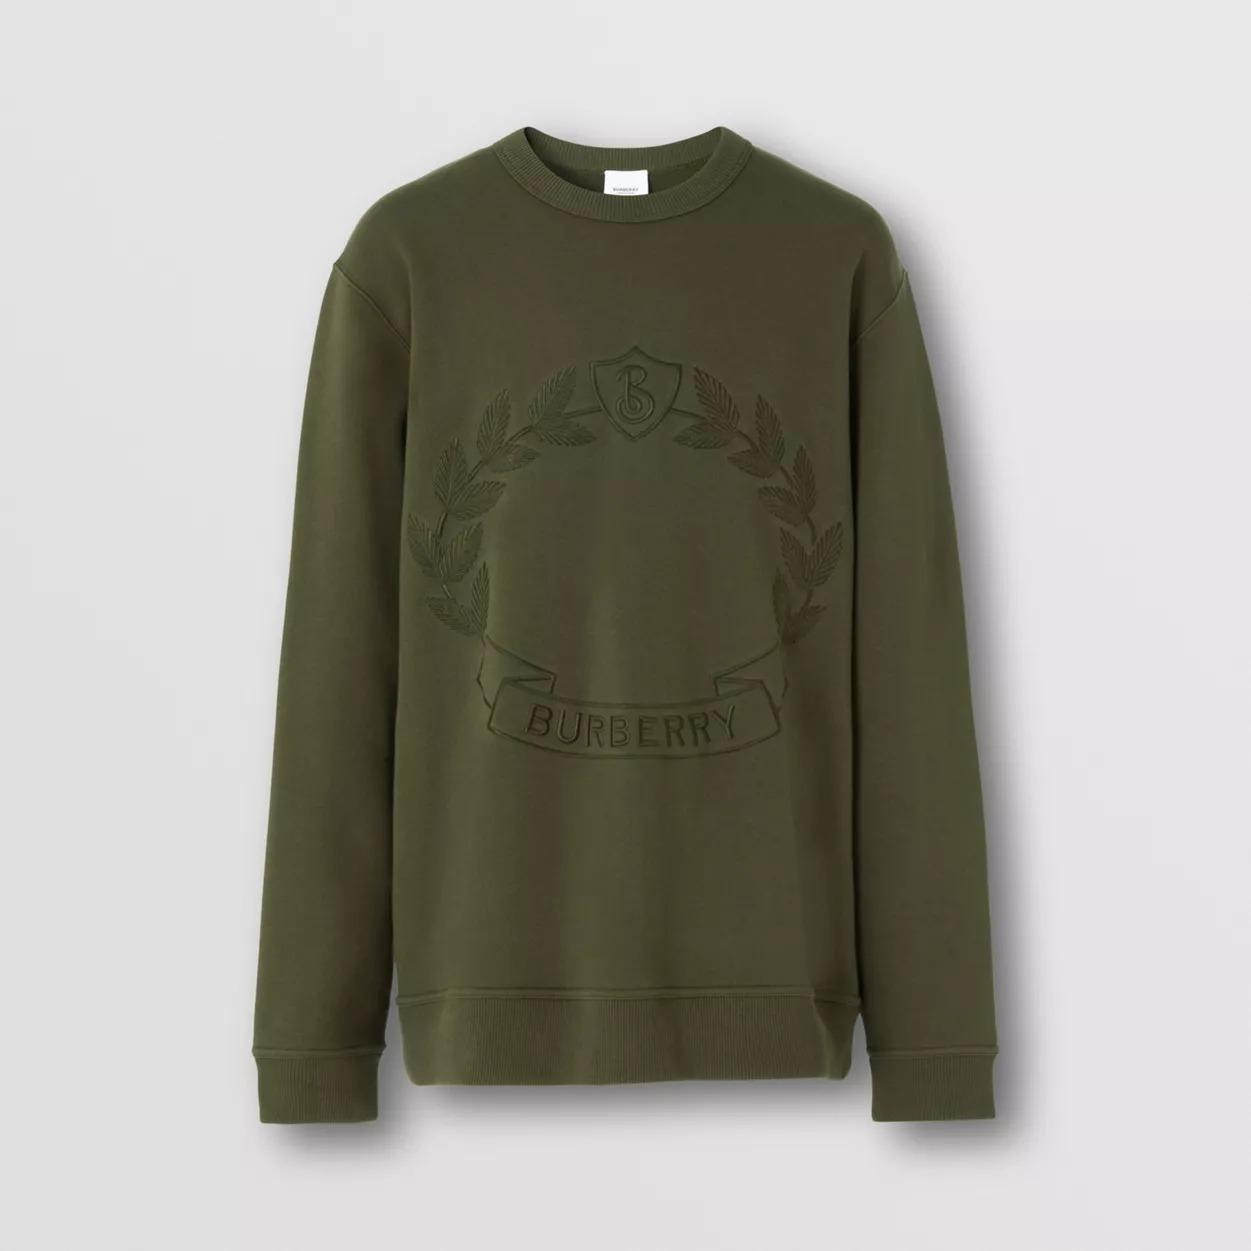 embroidered-oak-leaf-crest-cotton-sweatshirt-4787_16845003971-1000